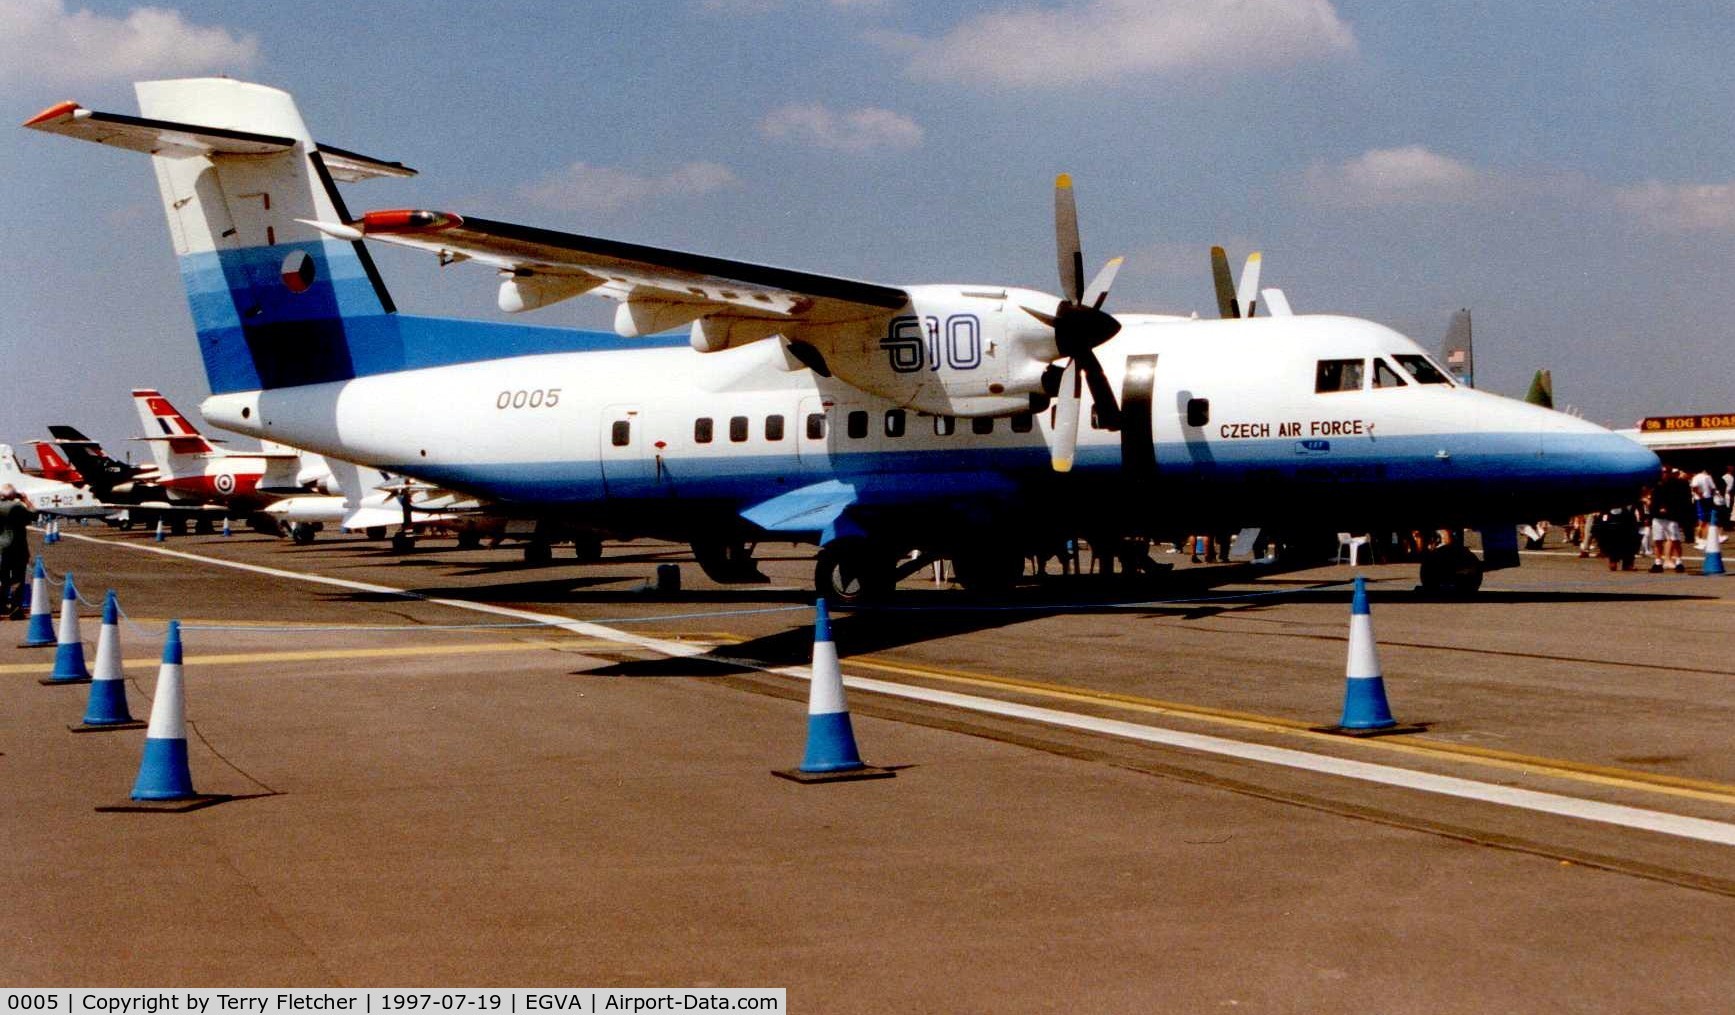 0005, 1990 Let L-610M C/N X-05, Let 610 displayed at 1997 Fairford Air Tattoo